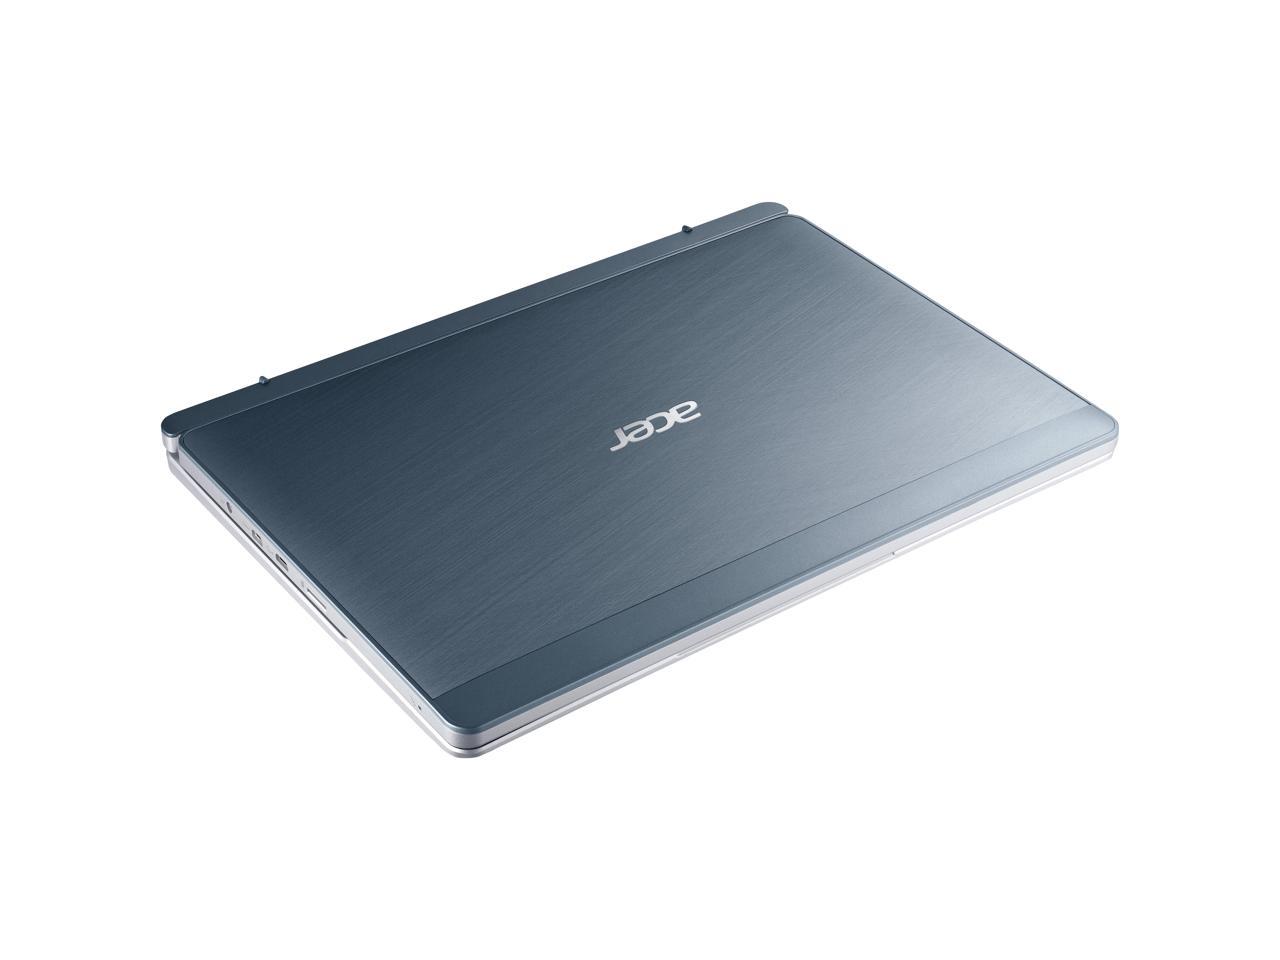 Ноутбук память 64 гб. Планшет Acer Aspire Switch 10 64gb z3735f ddr3 3g.